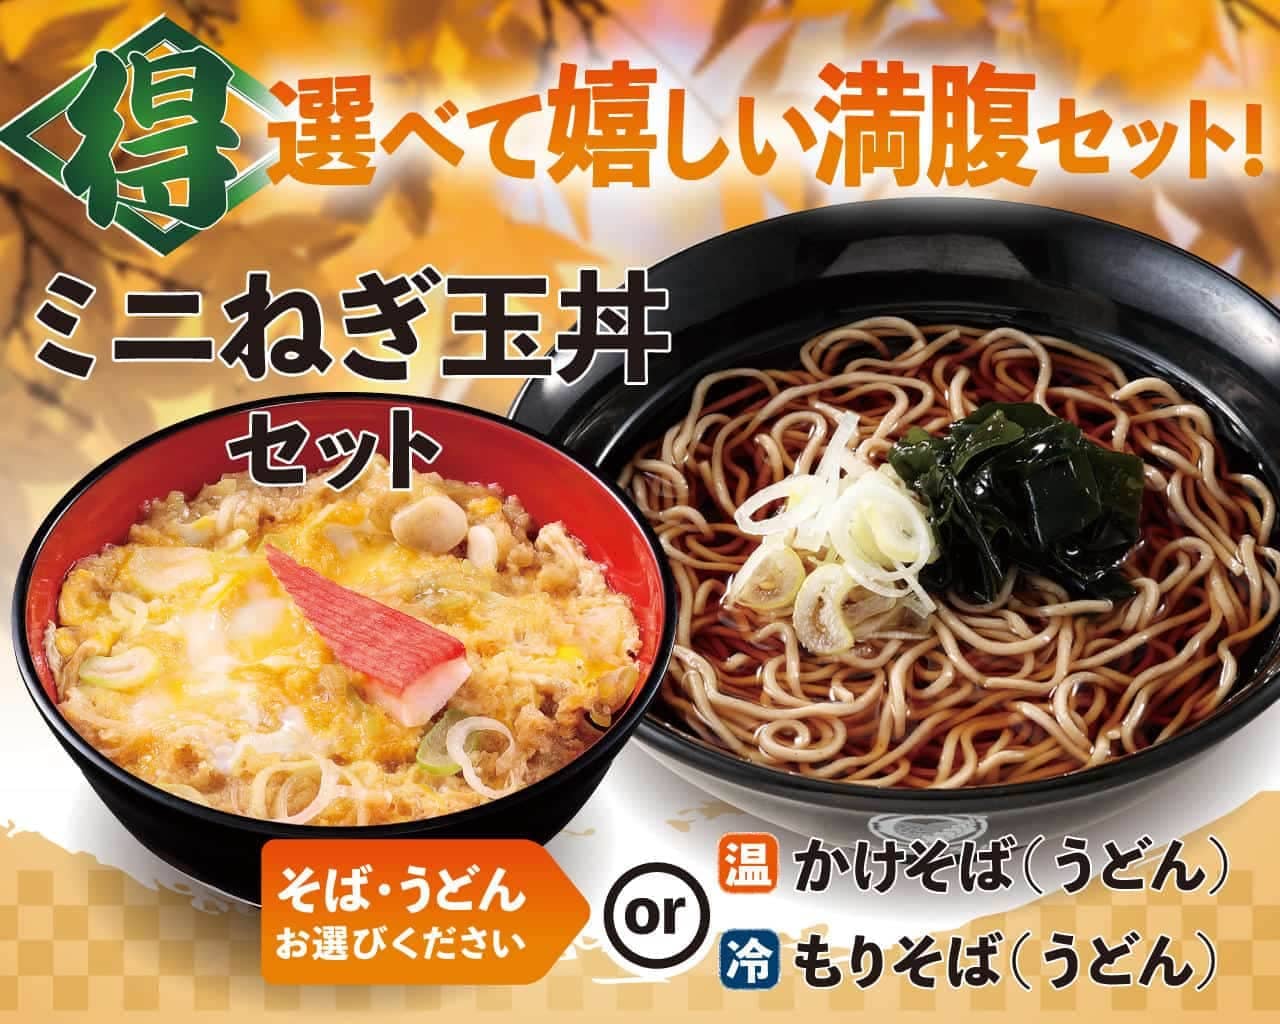 Meidai Fuji Soba "Mini Umami Spicy Pork Bowl Set", "Mini Beni Ginger Tendon Set", "Mini Negitama Bowl Set".